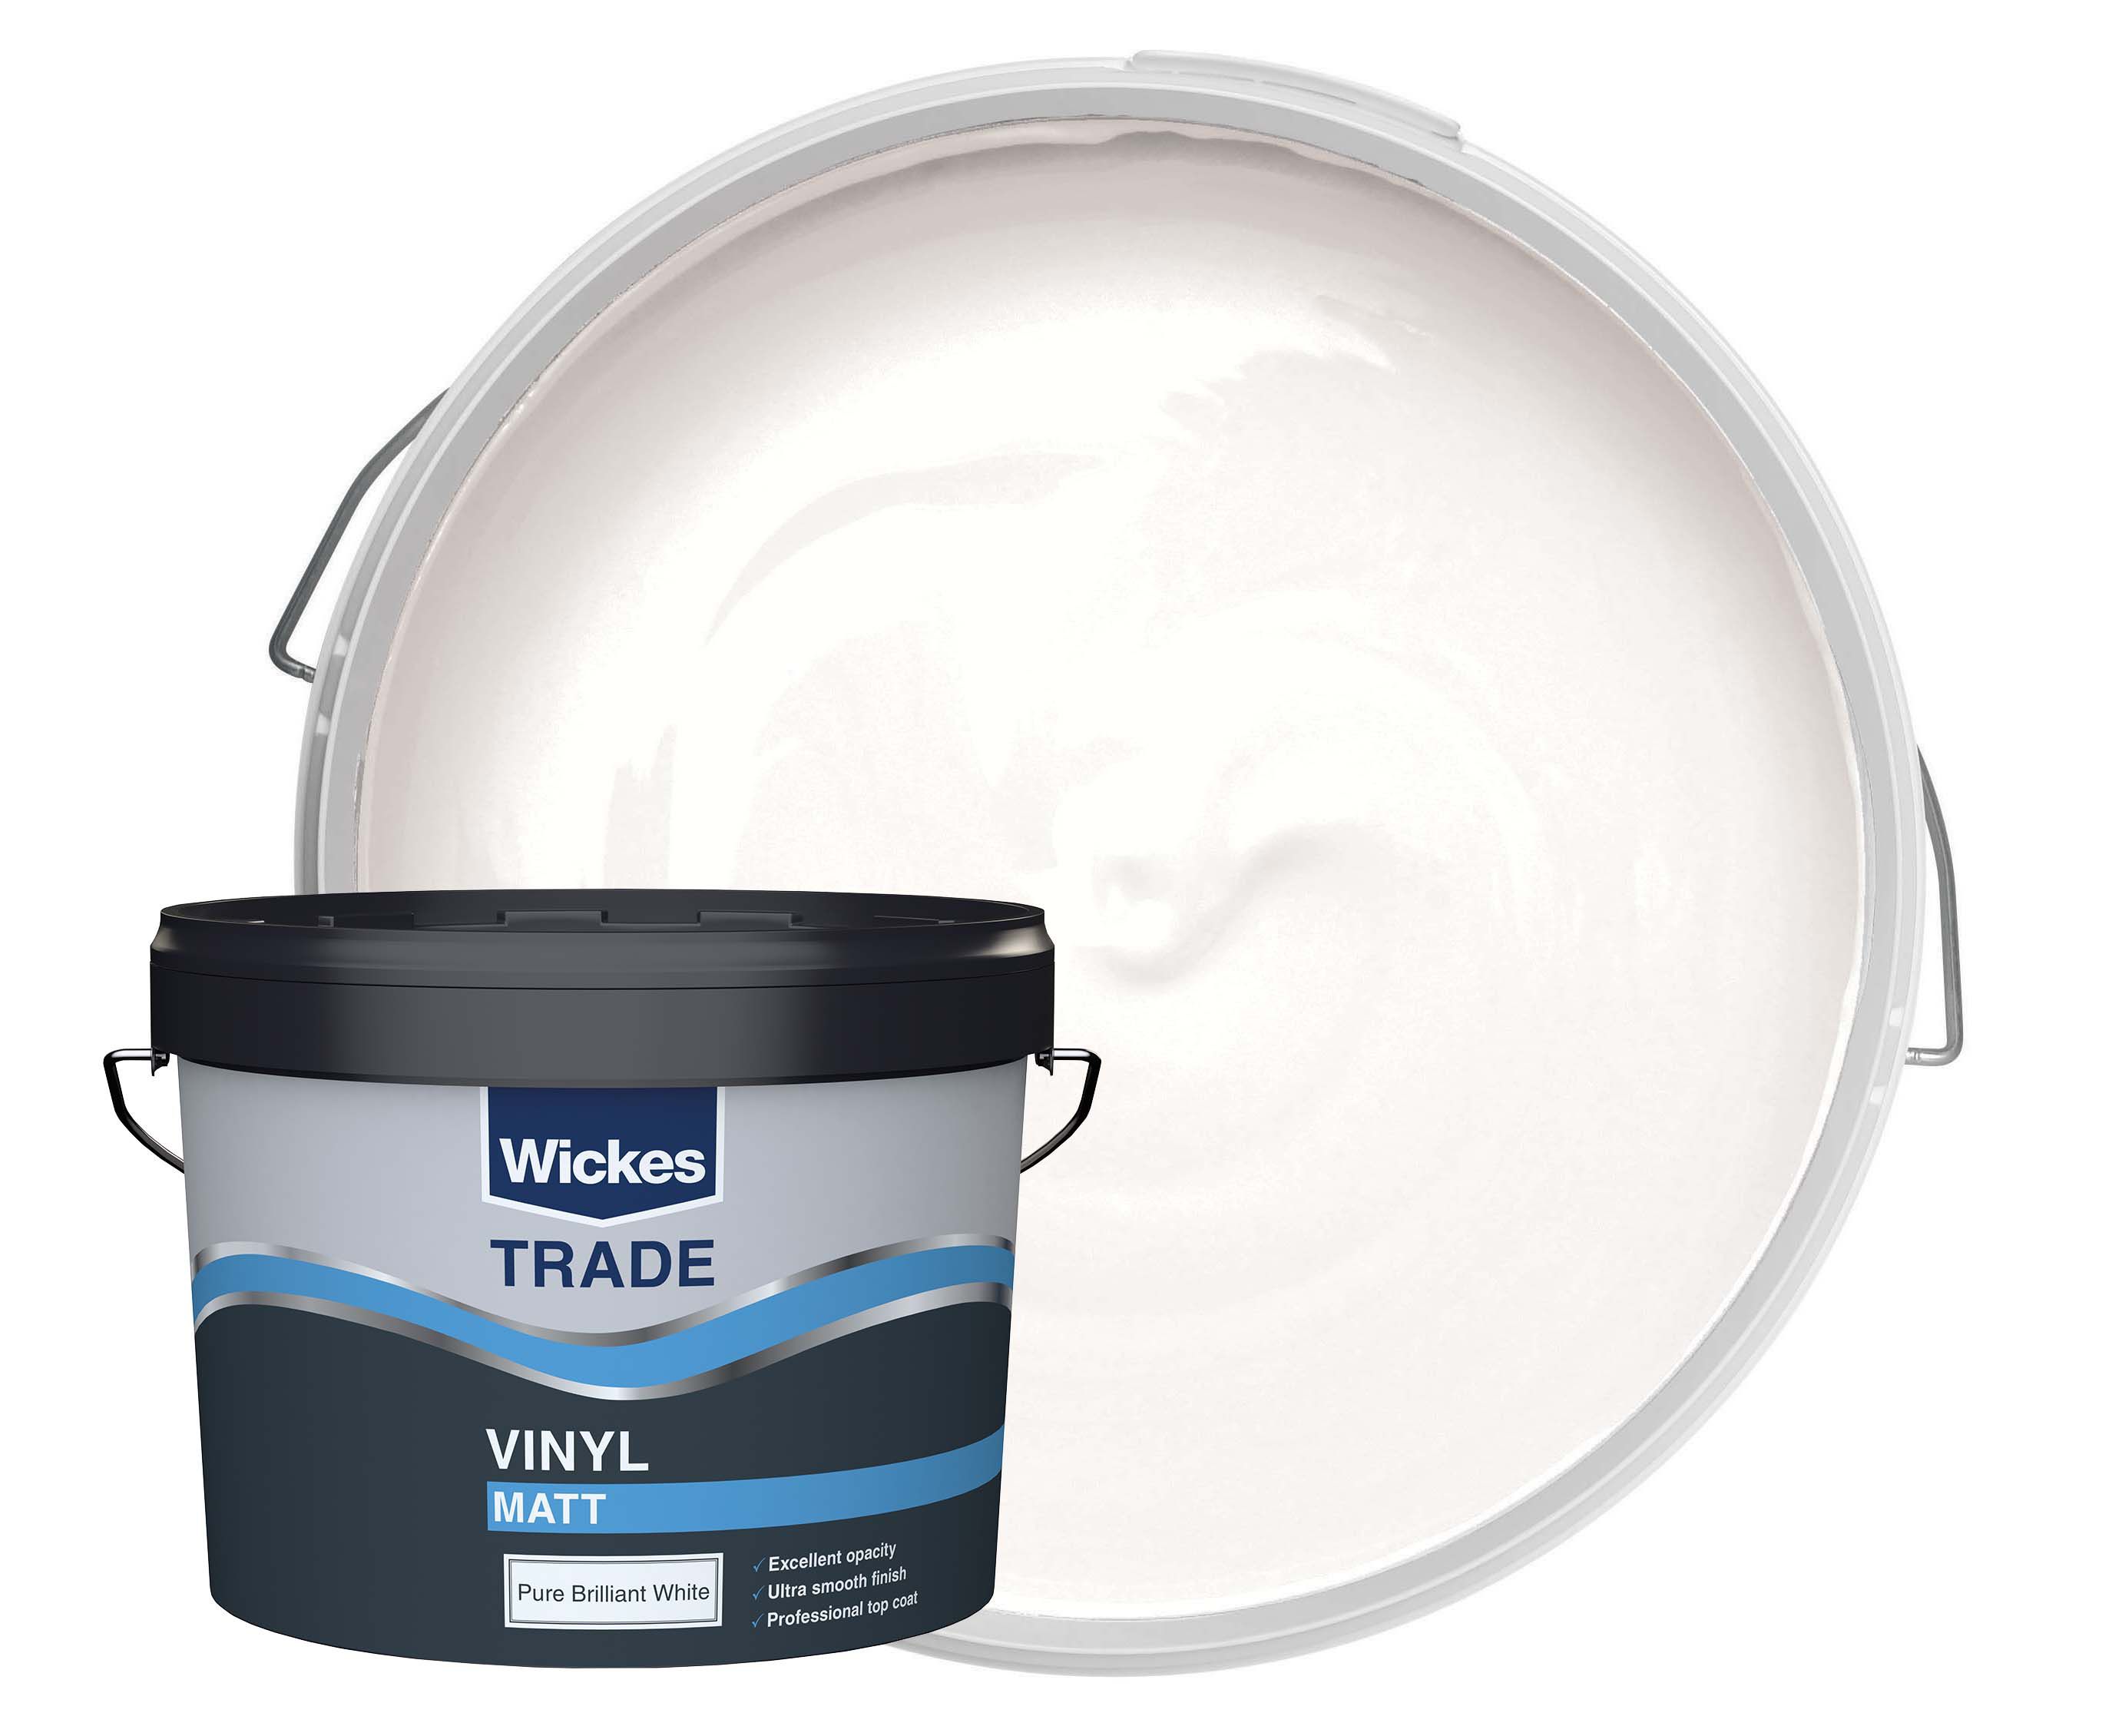 Wickes Trade Vinyl Matt Emulsion Paint - Pure Brilliant White 10L